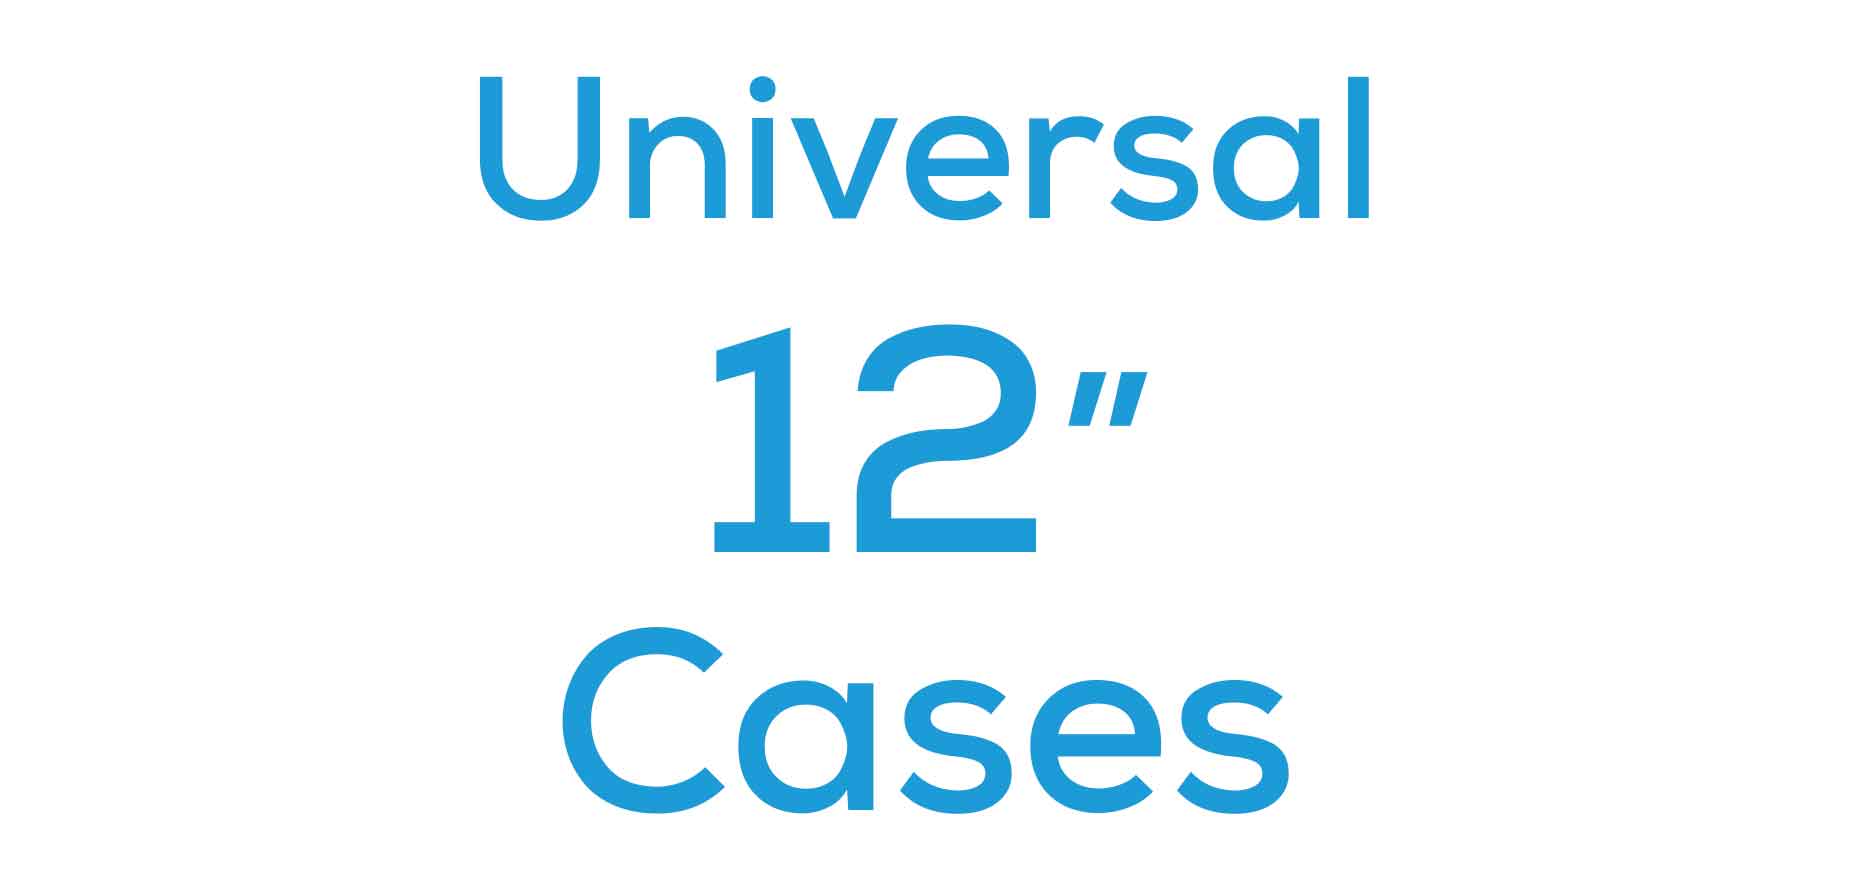 Universal 12